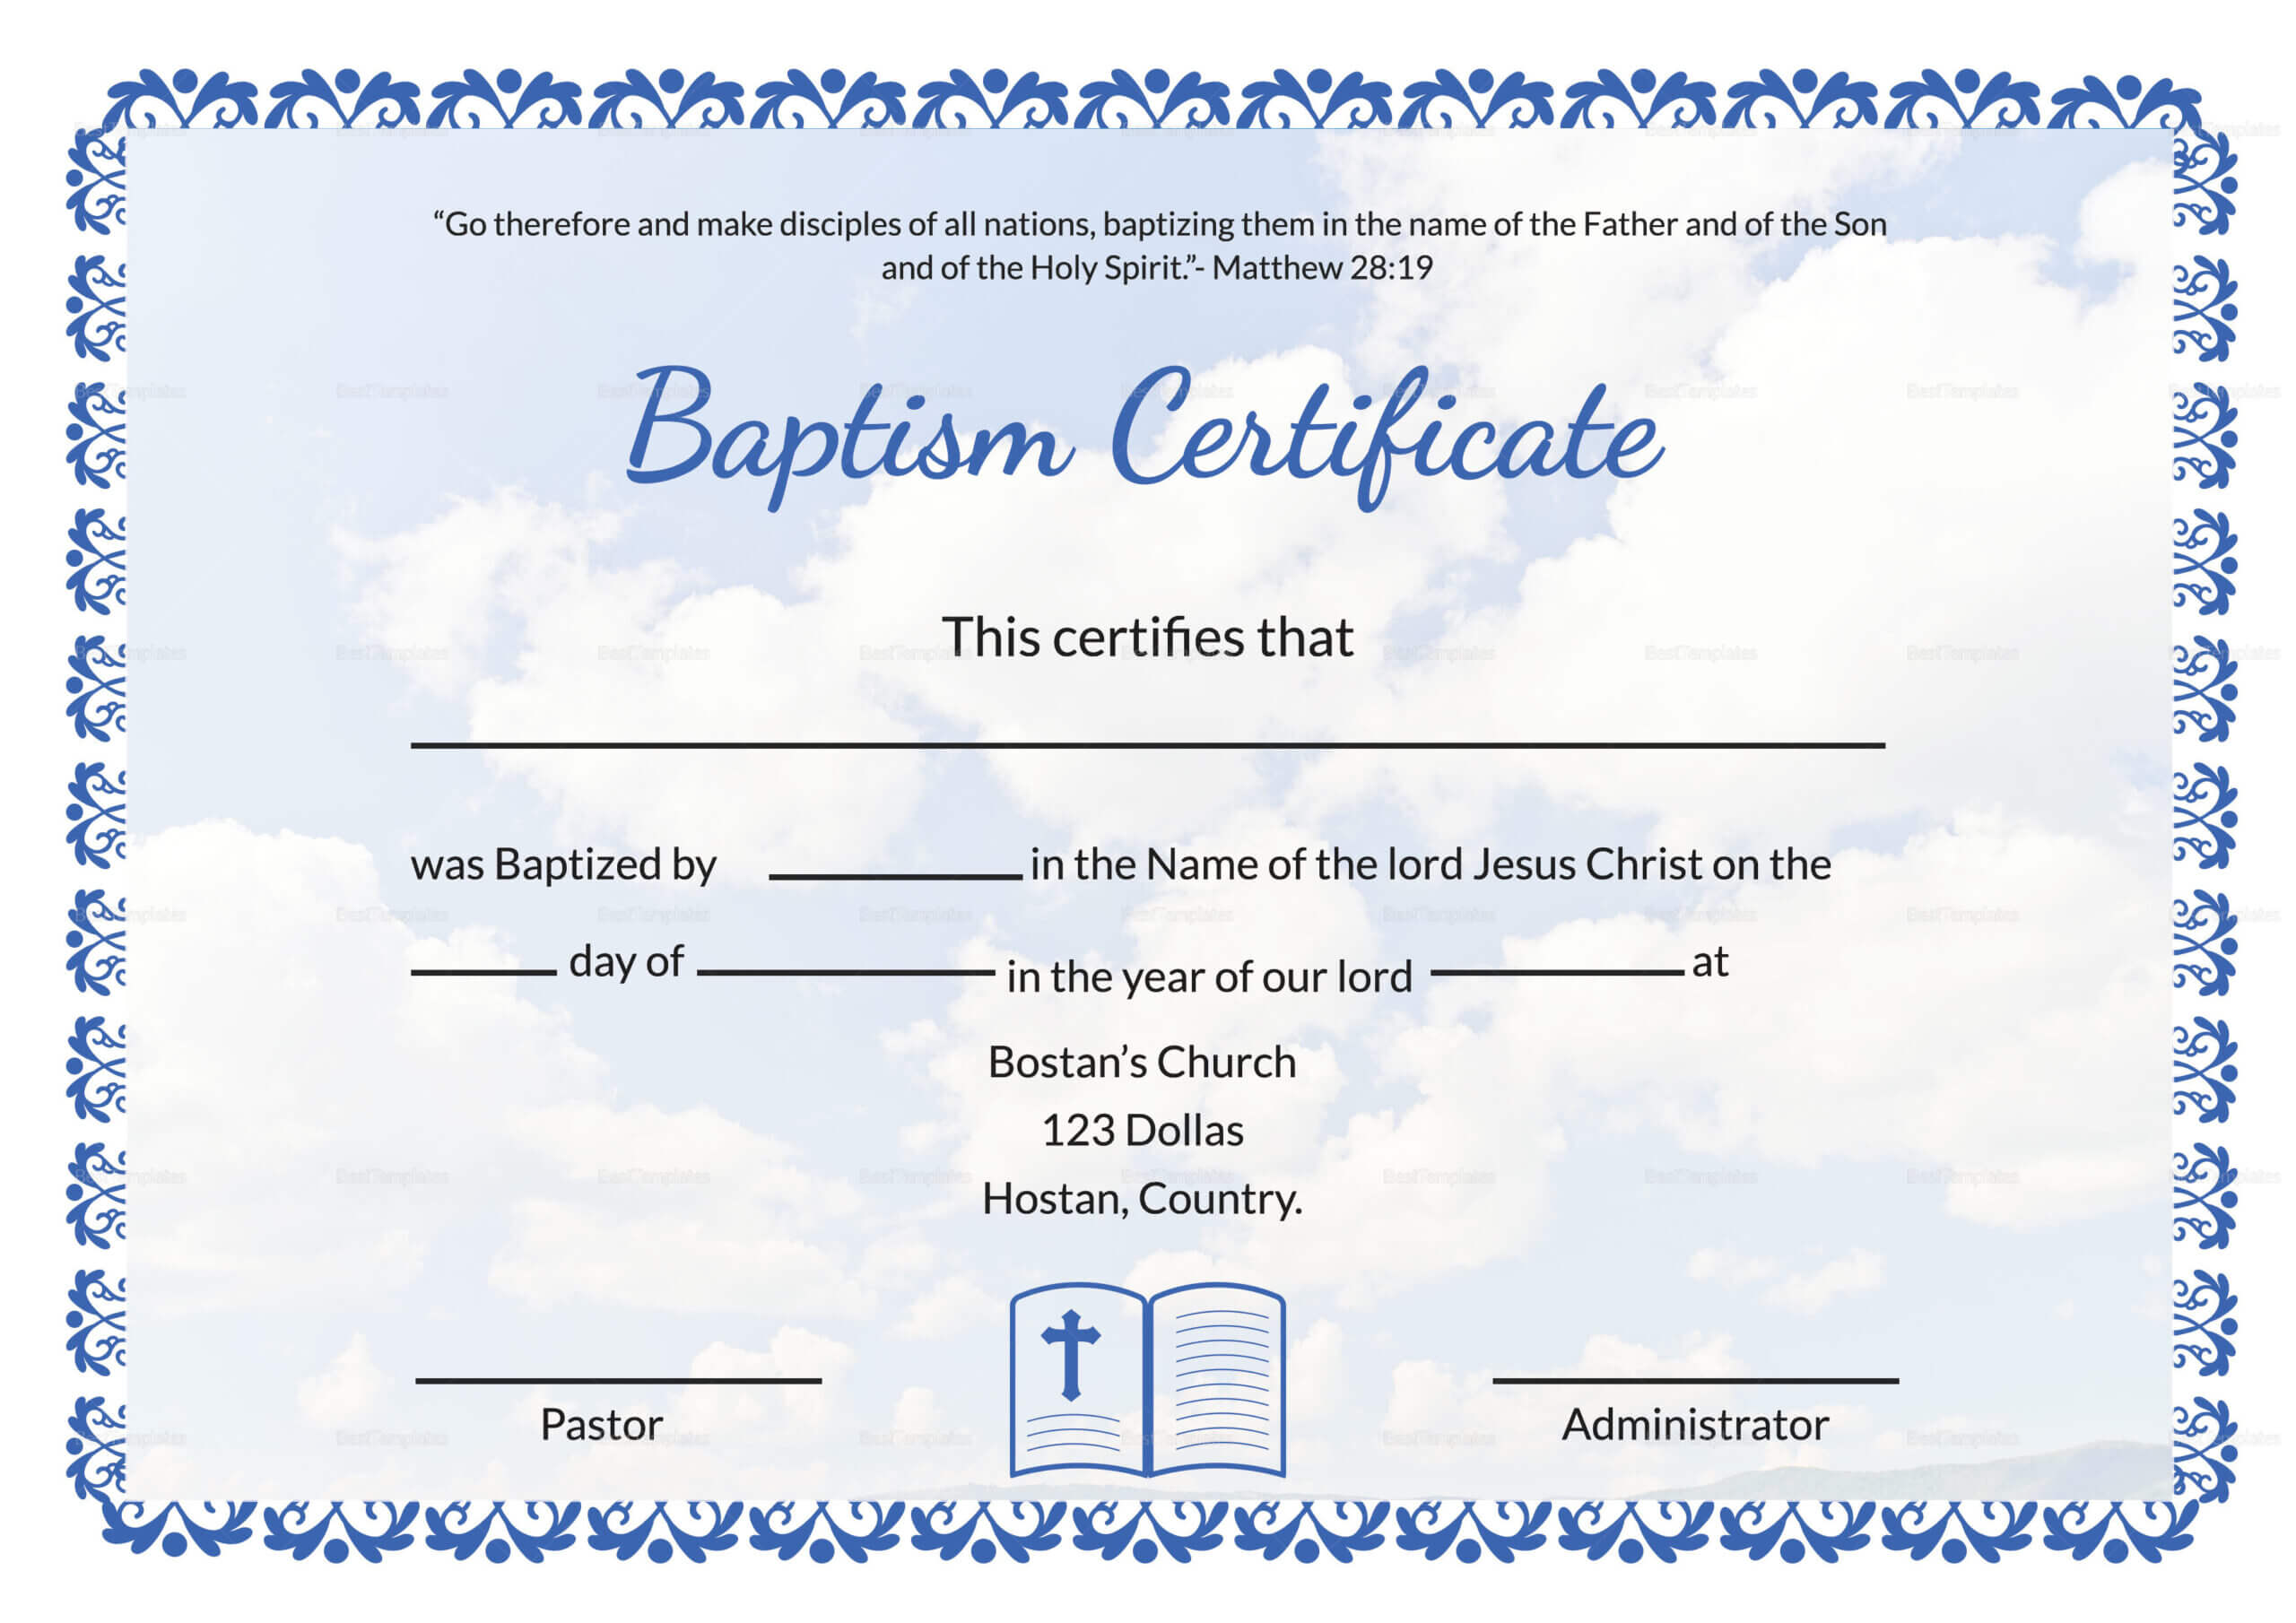 007 Certificate Of Baptism Template Ideas Unique Broadman Inside Christian Certificate Template